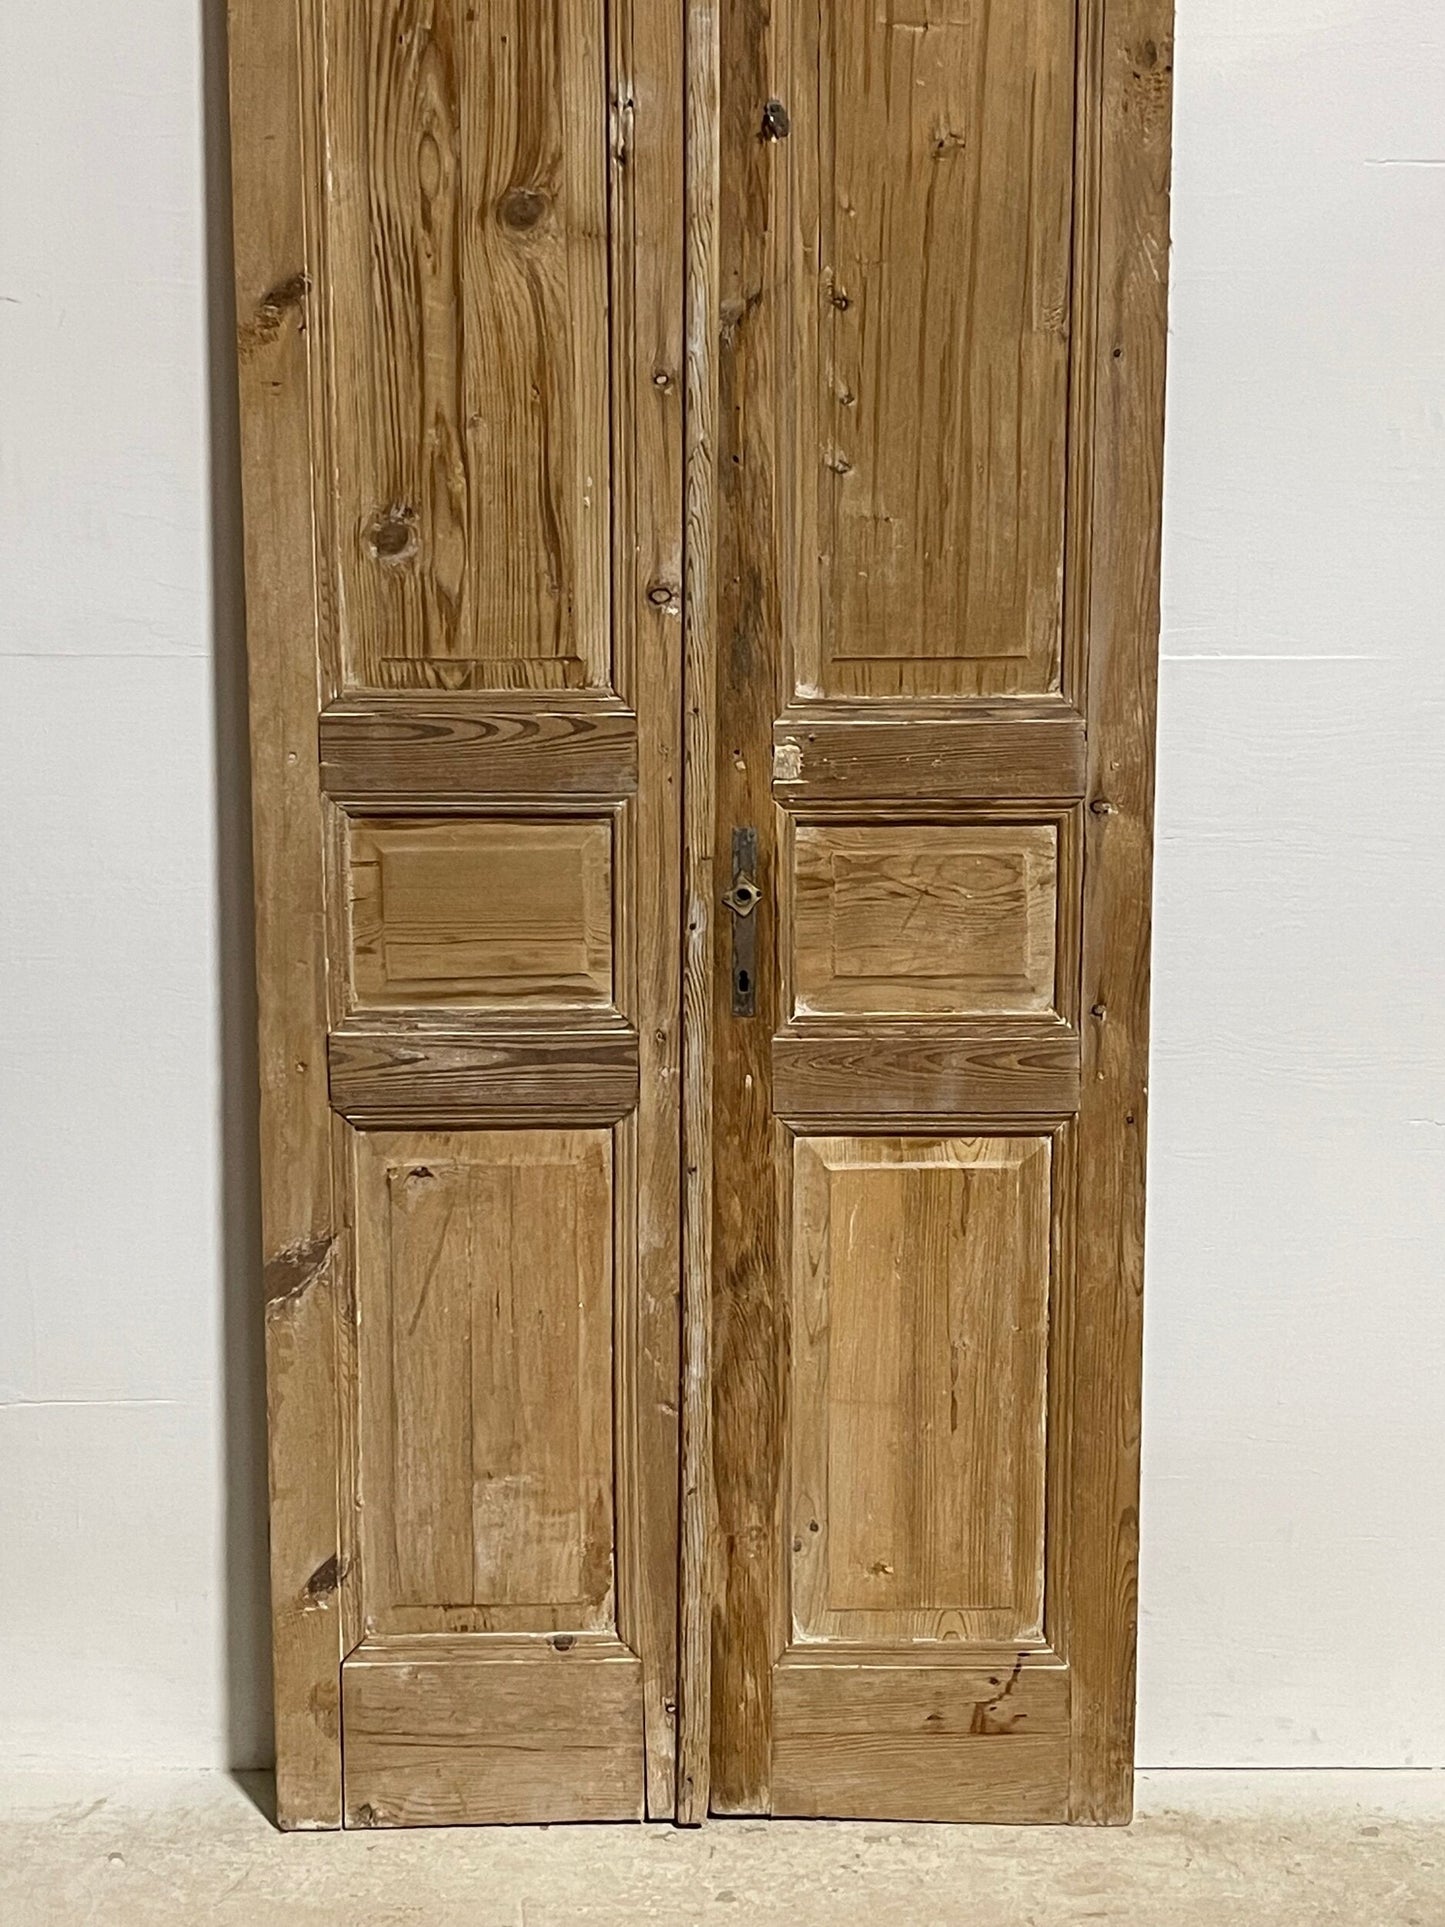 Antique French doors (92.75x36) H0199s